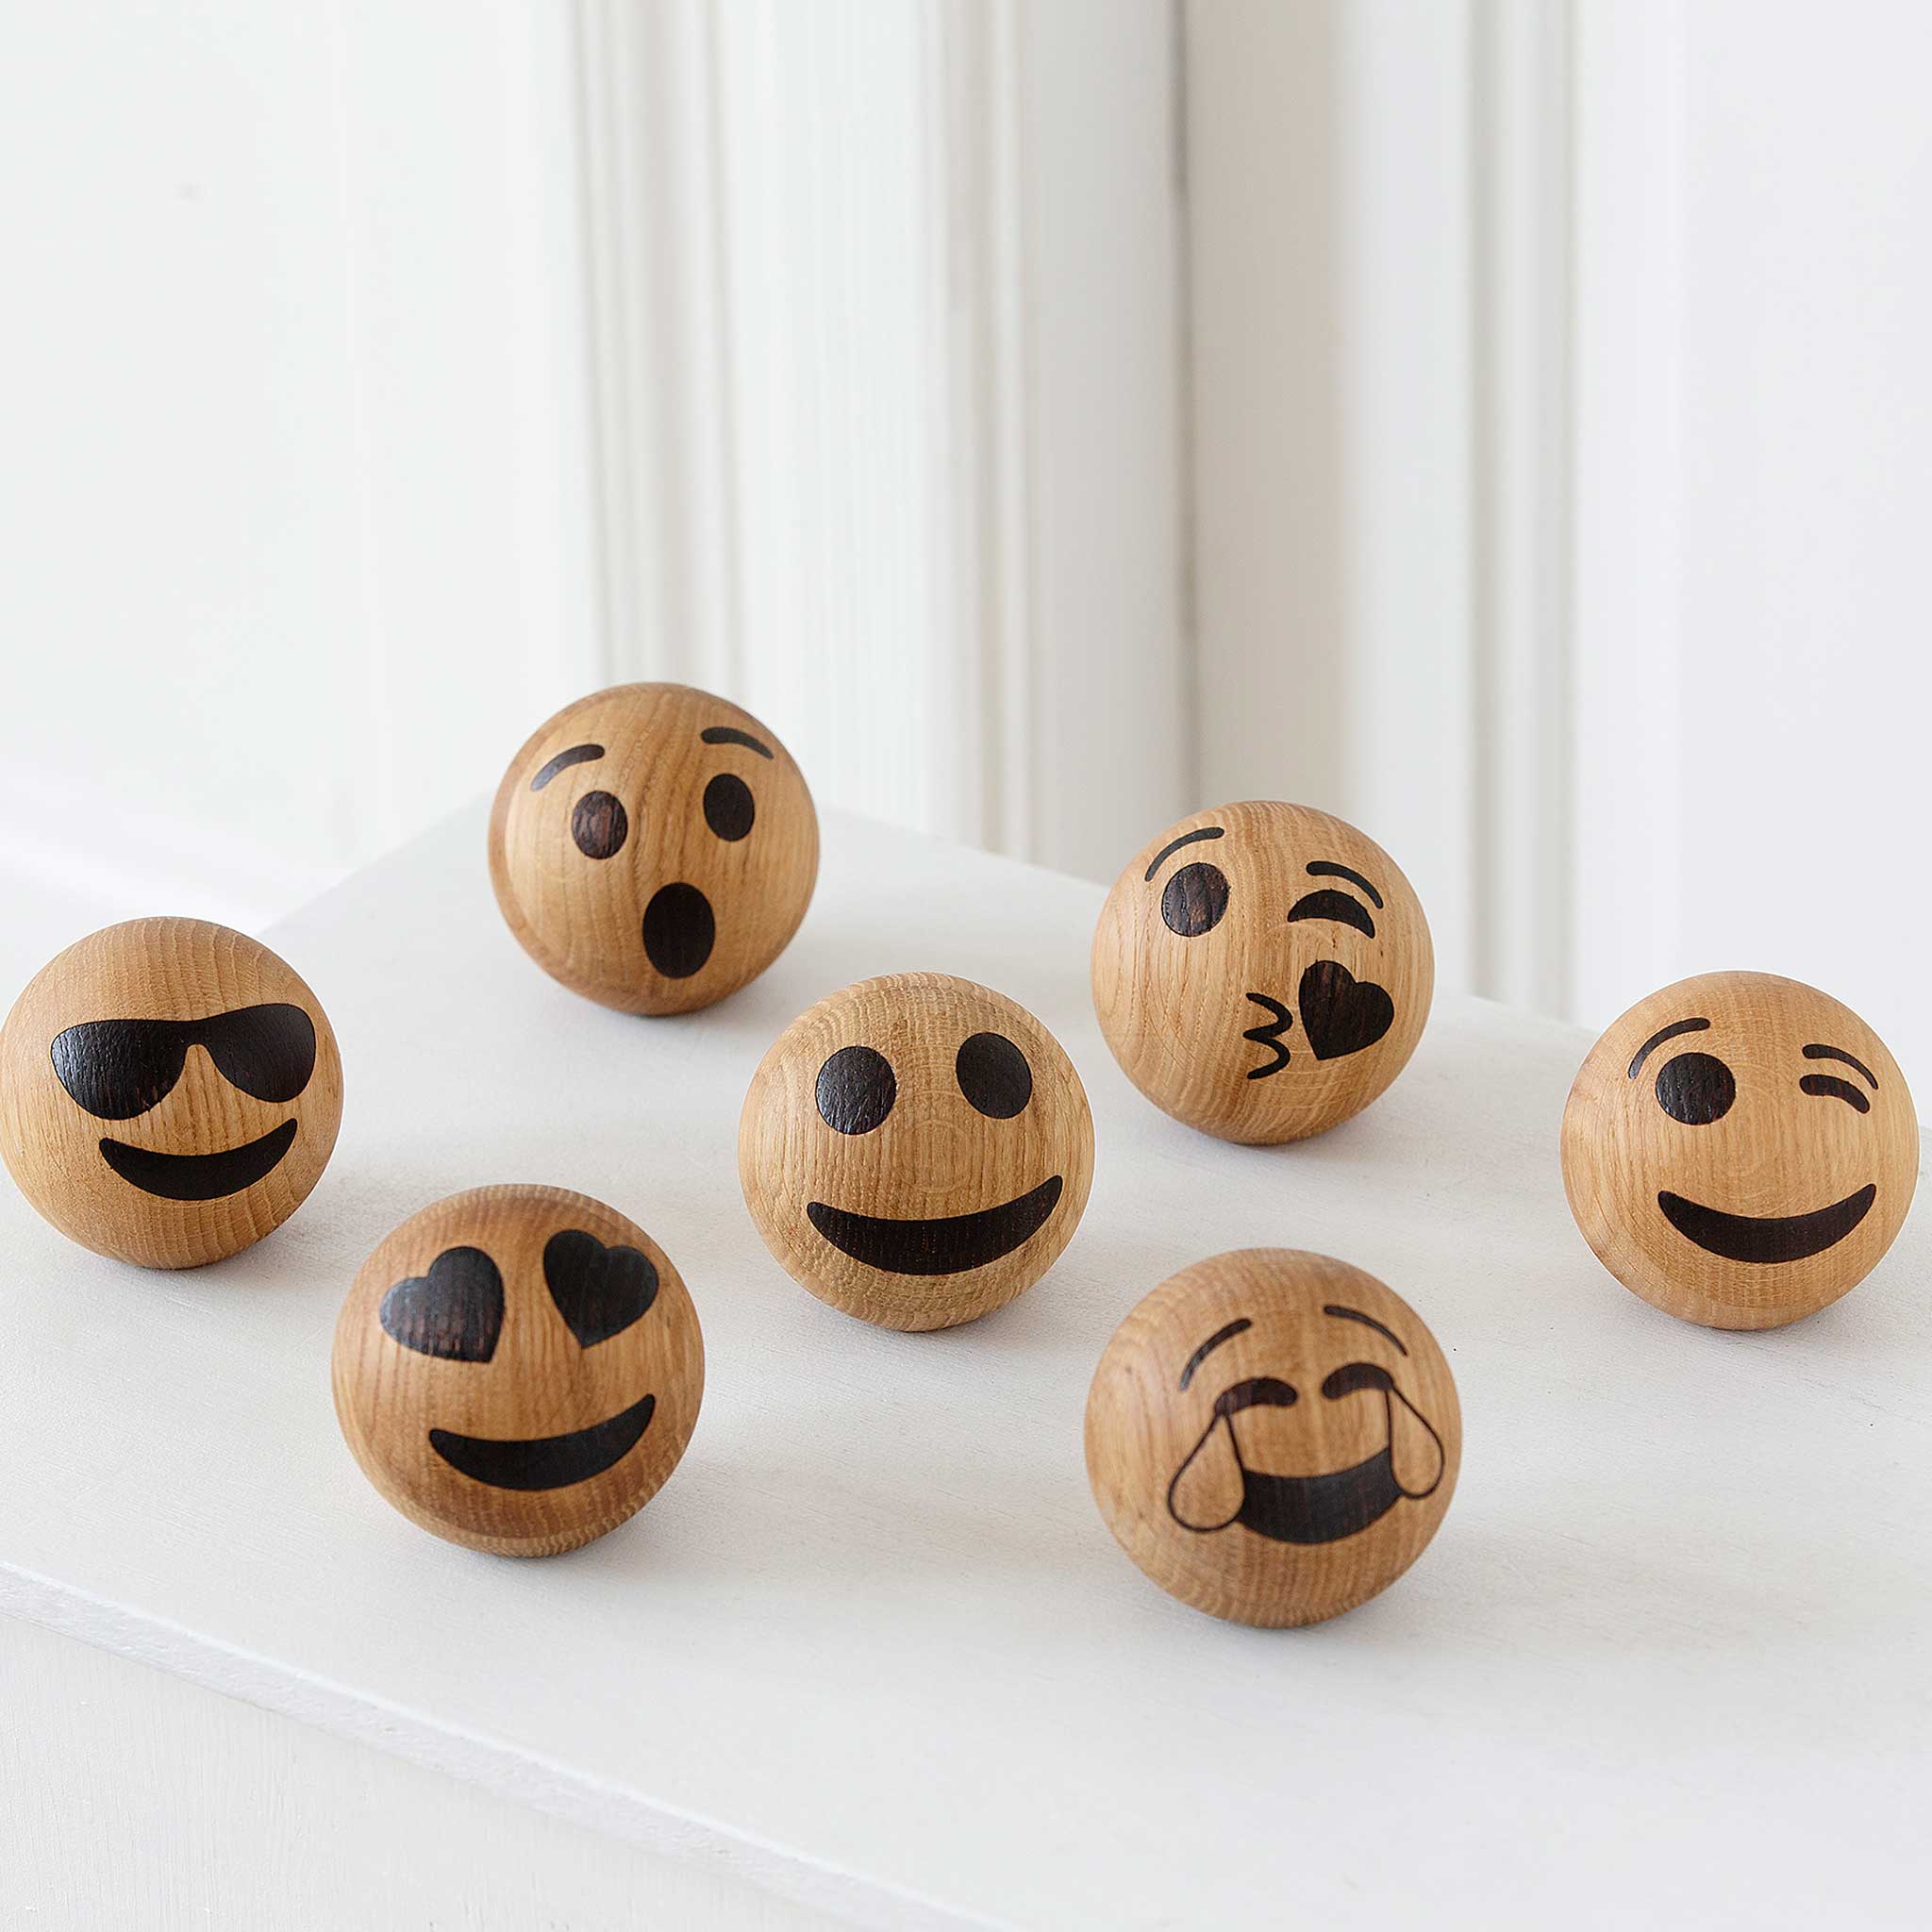 SPRING EMOTIONS | Cool | Gesicht mit Sonnenbrille | Holz EMOTICONS | mencke&vagnby | Spring Copenhagen - Charles & Marie